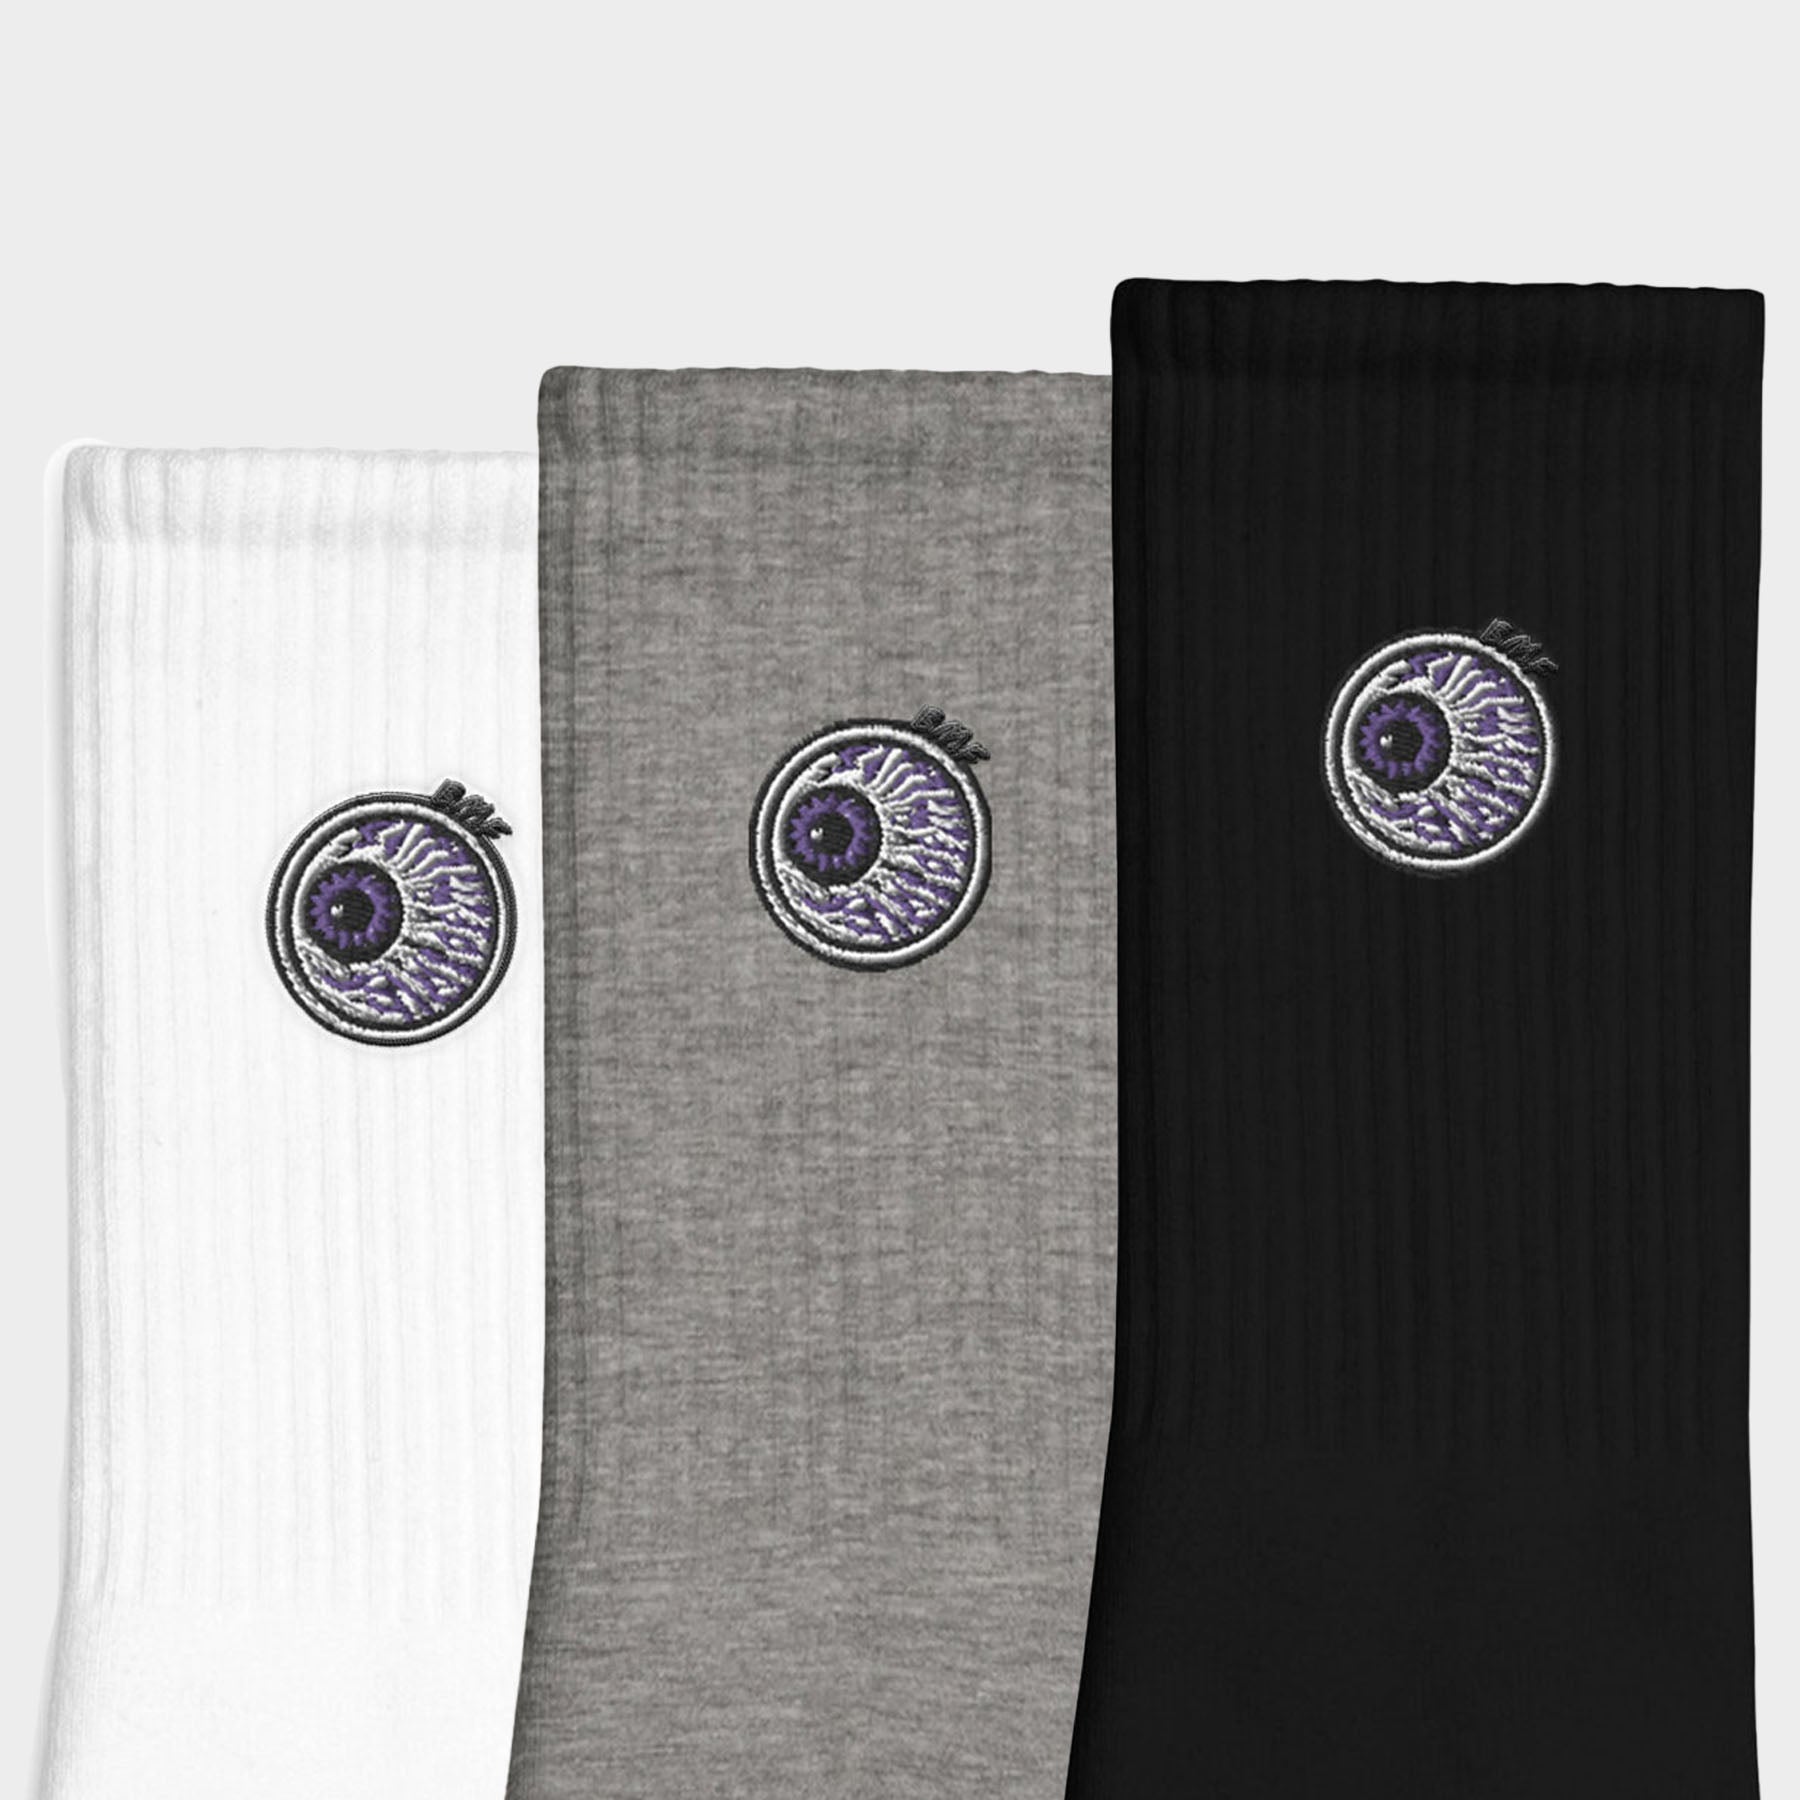 jordan 3 dark iris matching socks embroidery